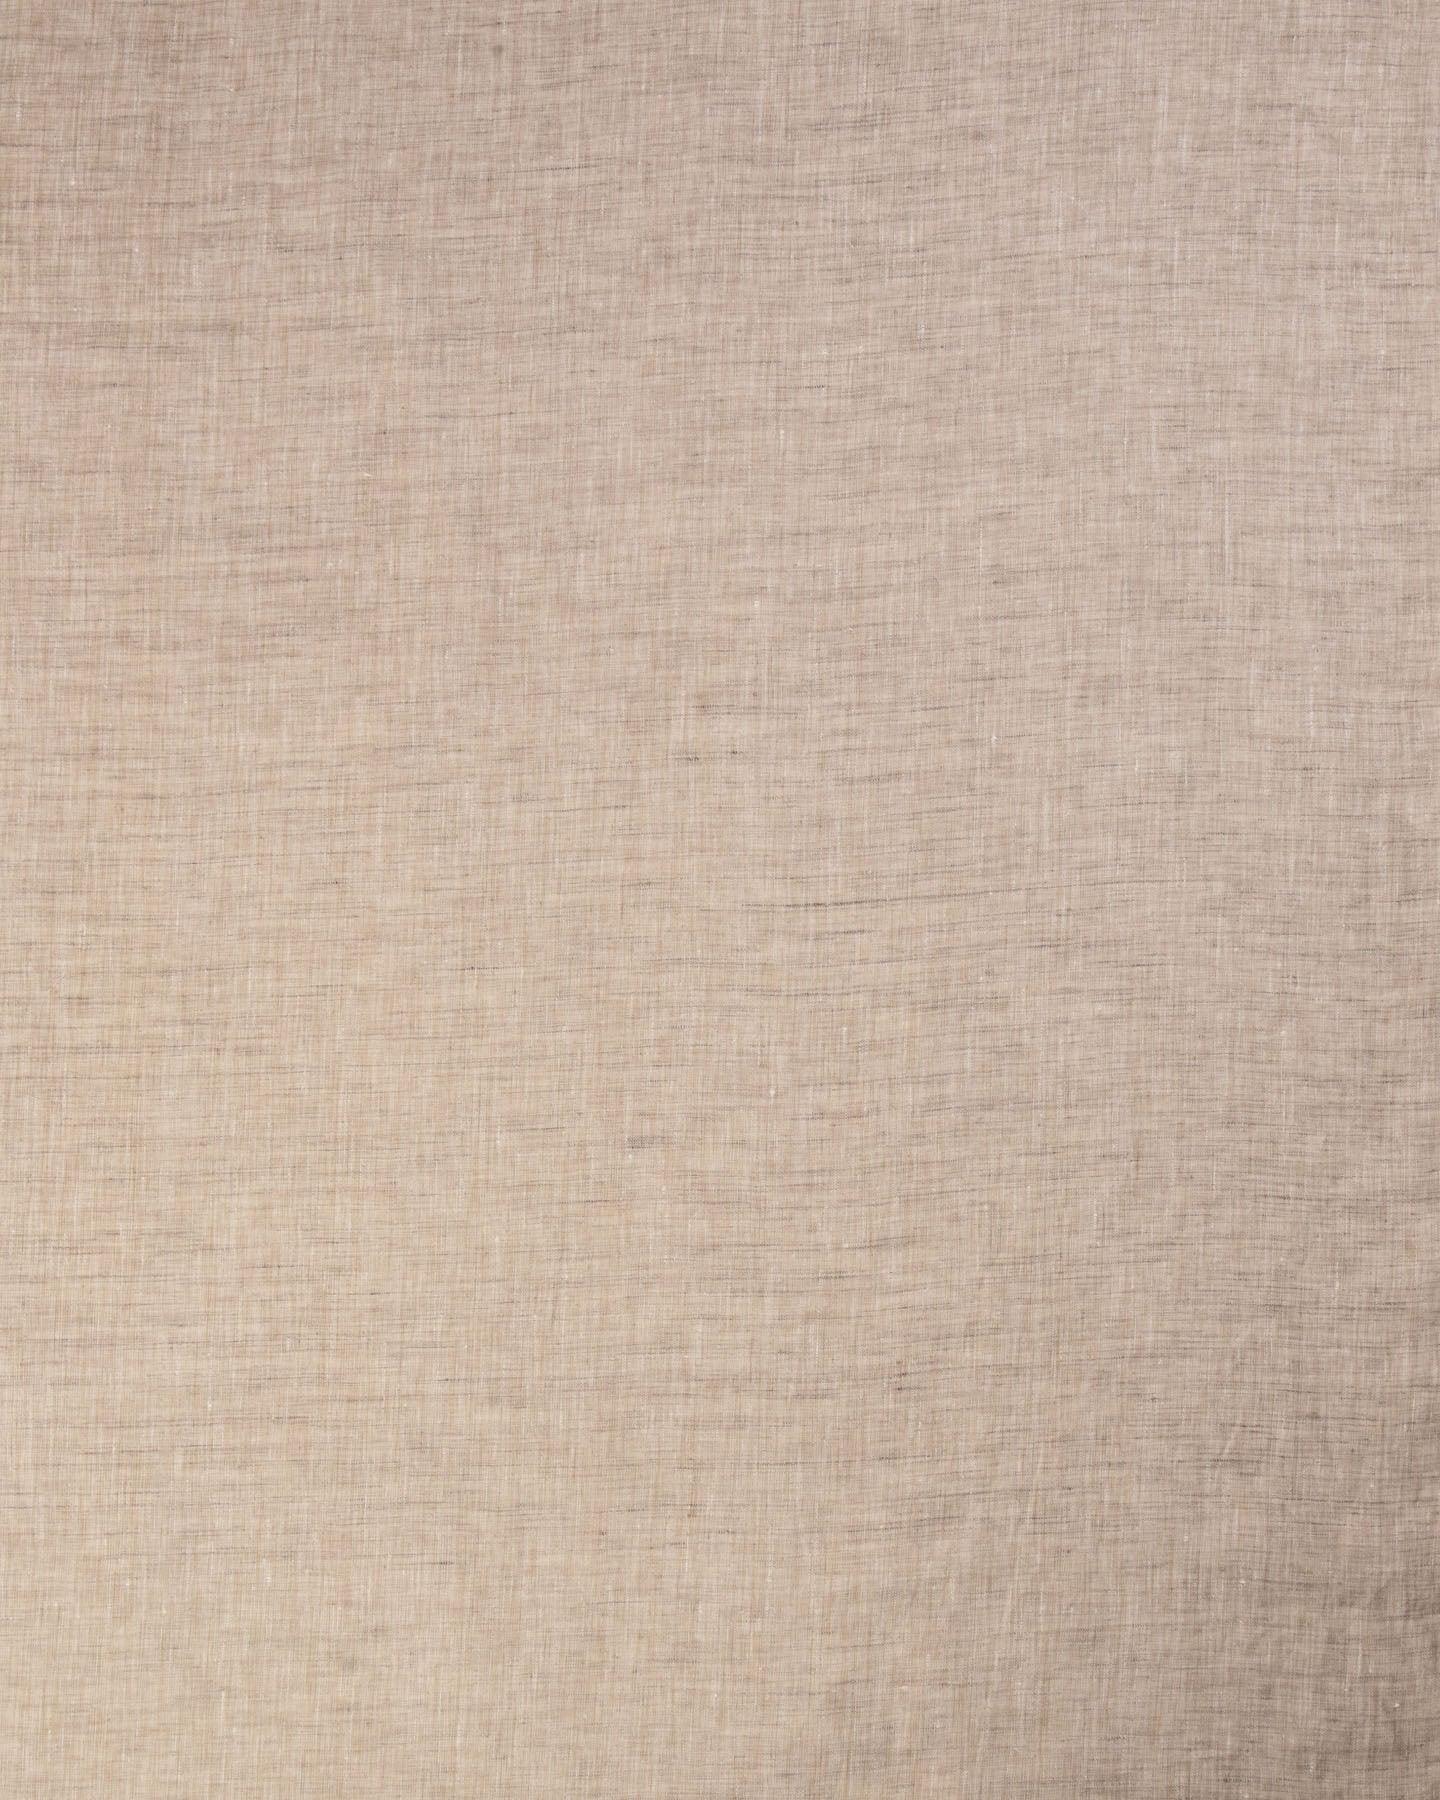 Beige Textured Plain Woven Cotton Linen Fabric - By HolyWeaves, Benares